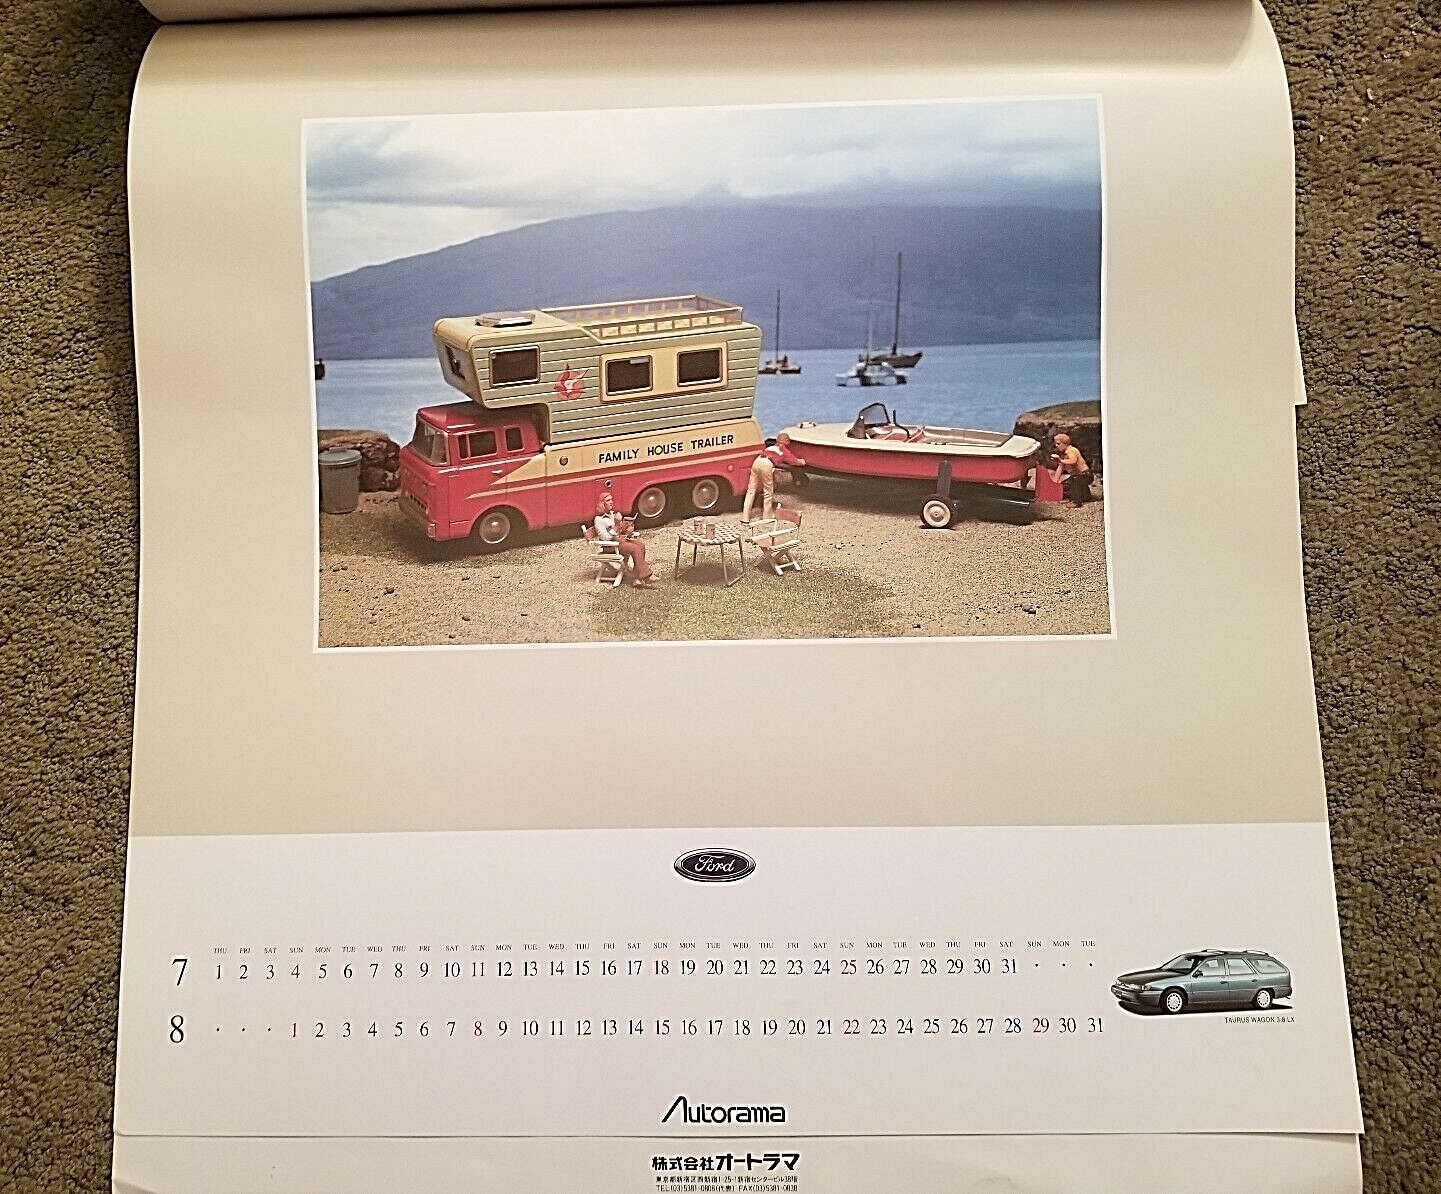 1993 Ford Autorama Calender Featuring Tinplate toys photos by TOSH WAKABAYASHI